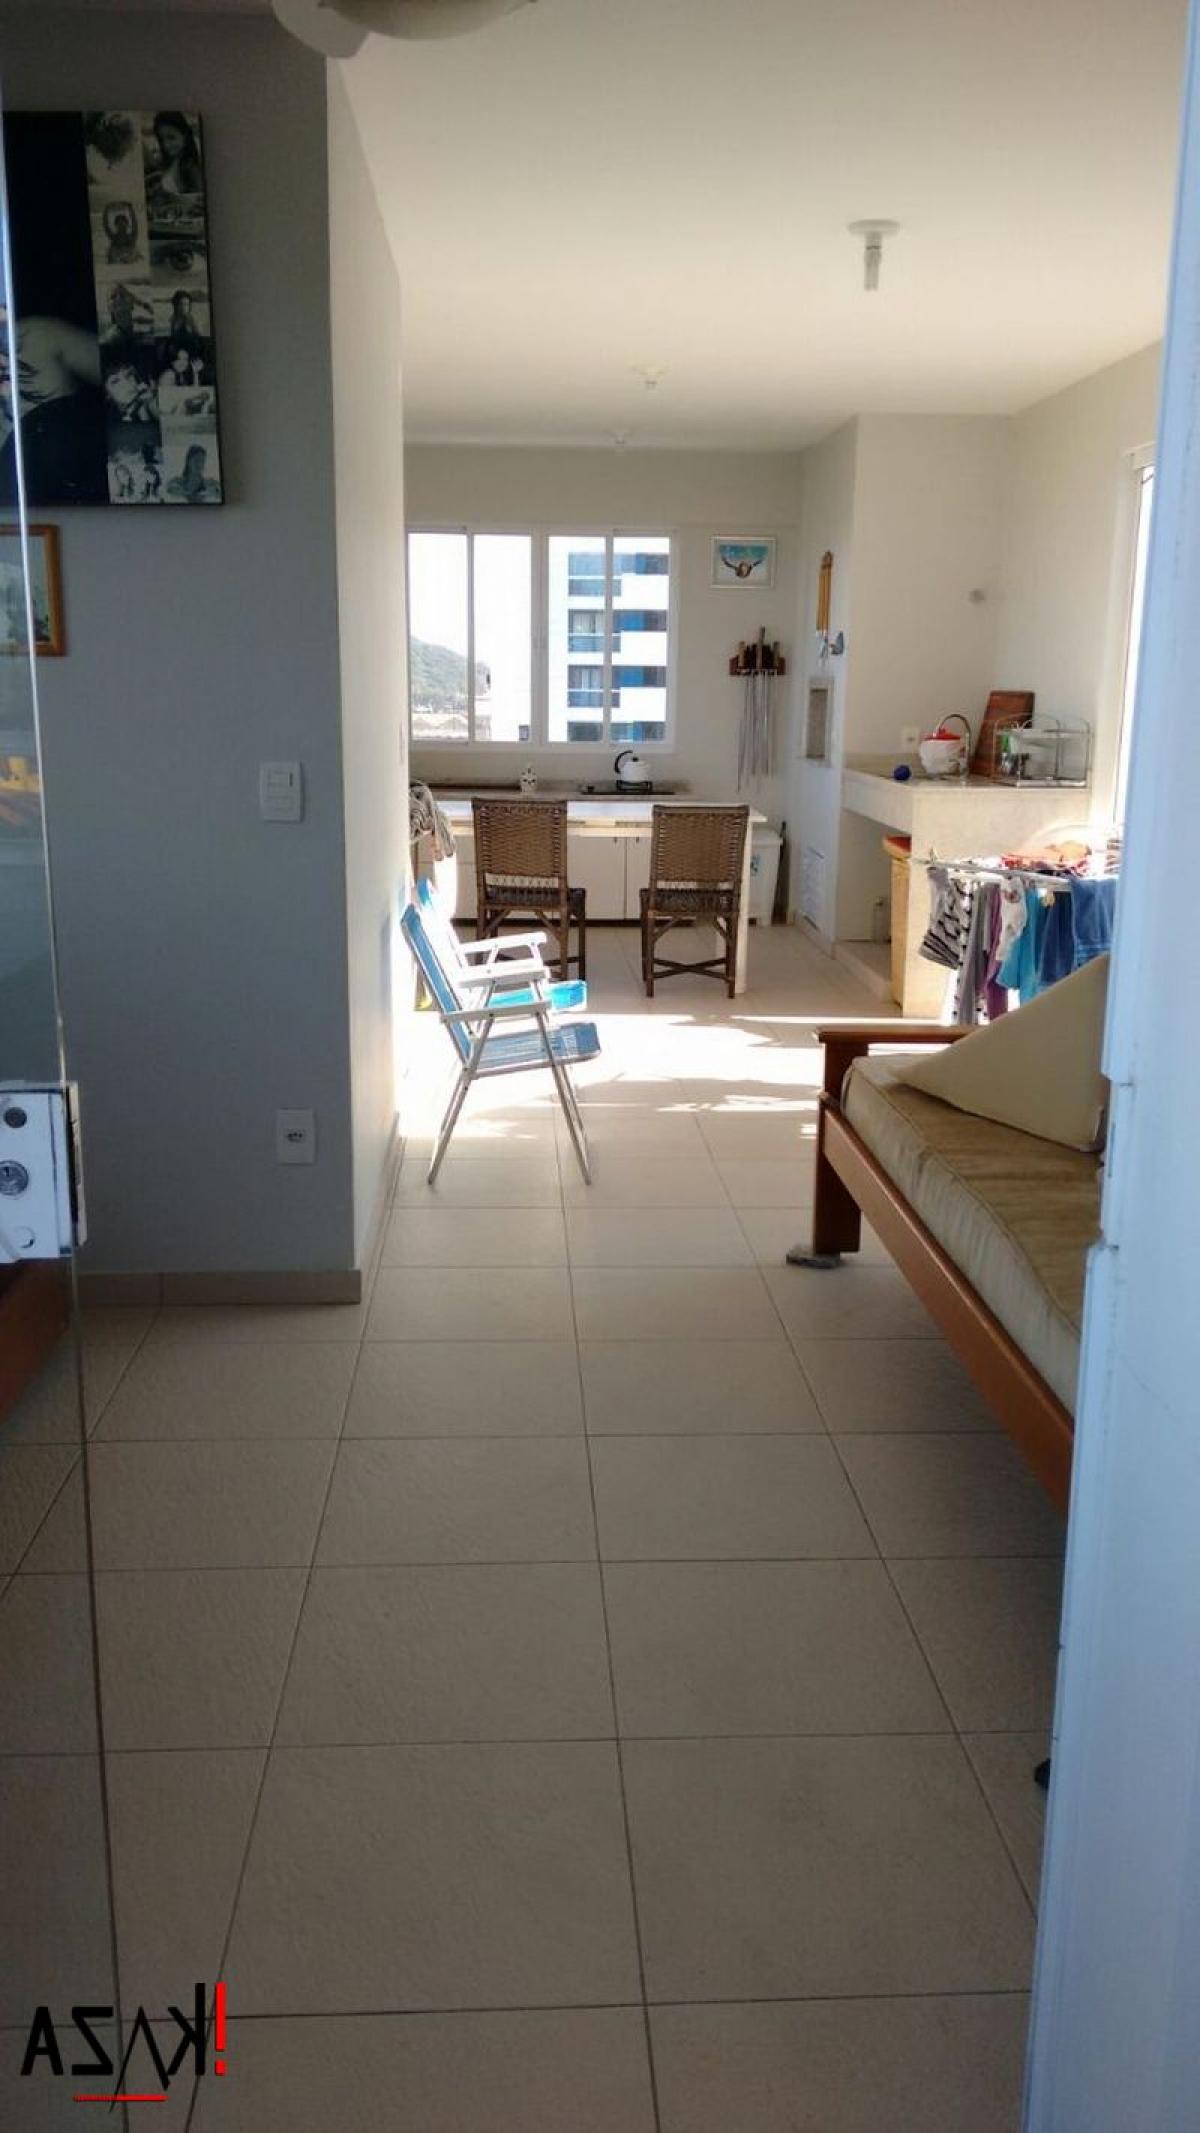 Picture of Apartment For Sale in Imbituba, Santa Catarina, Brazil